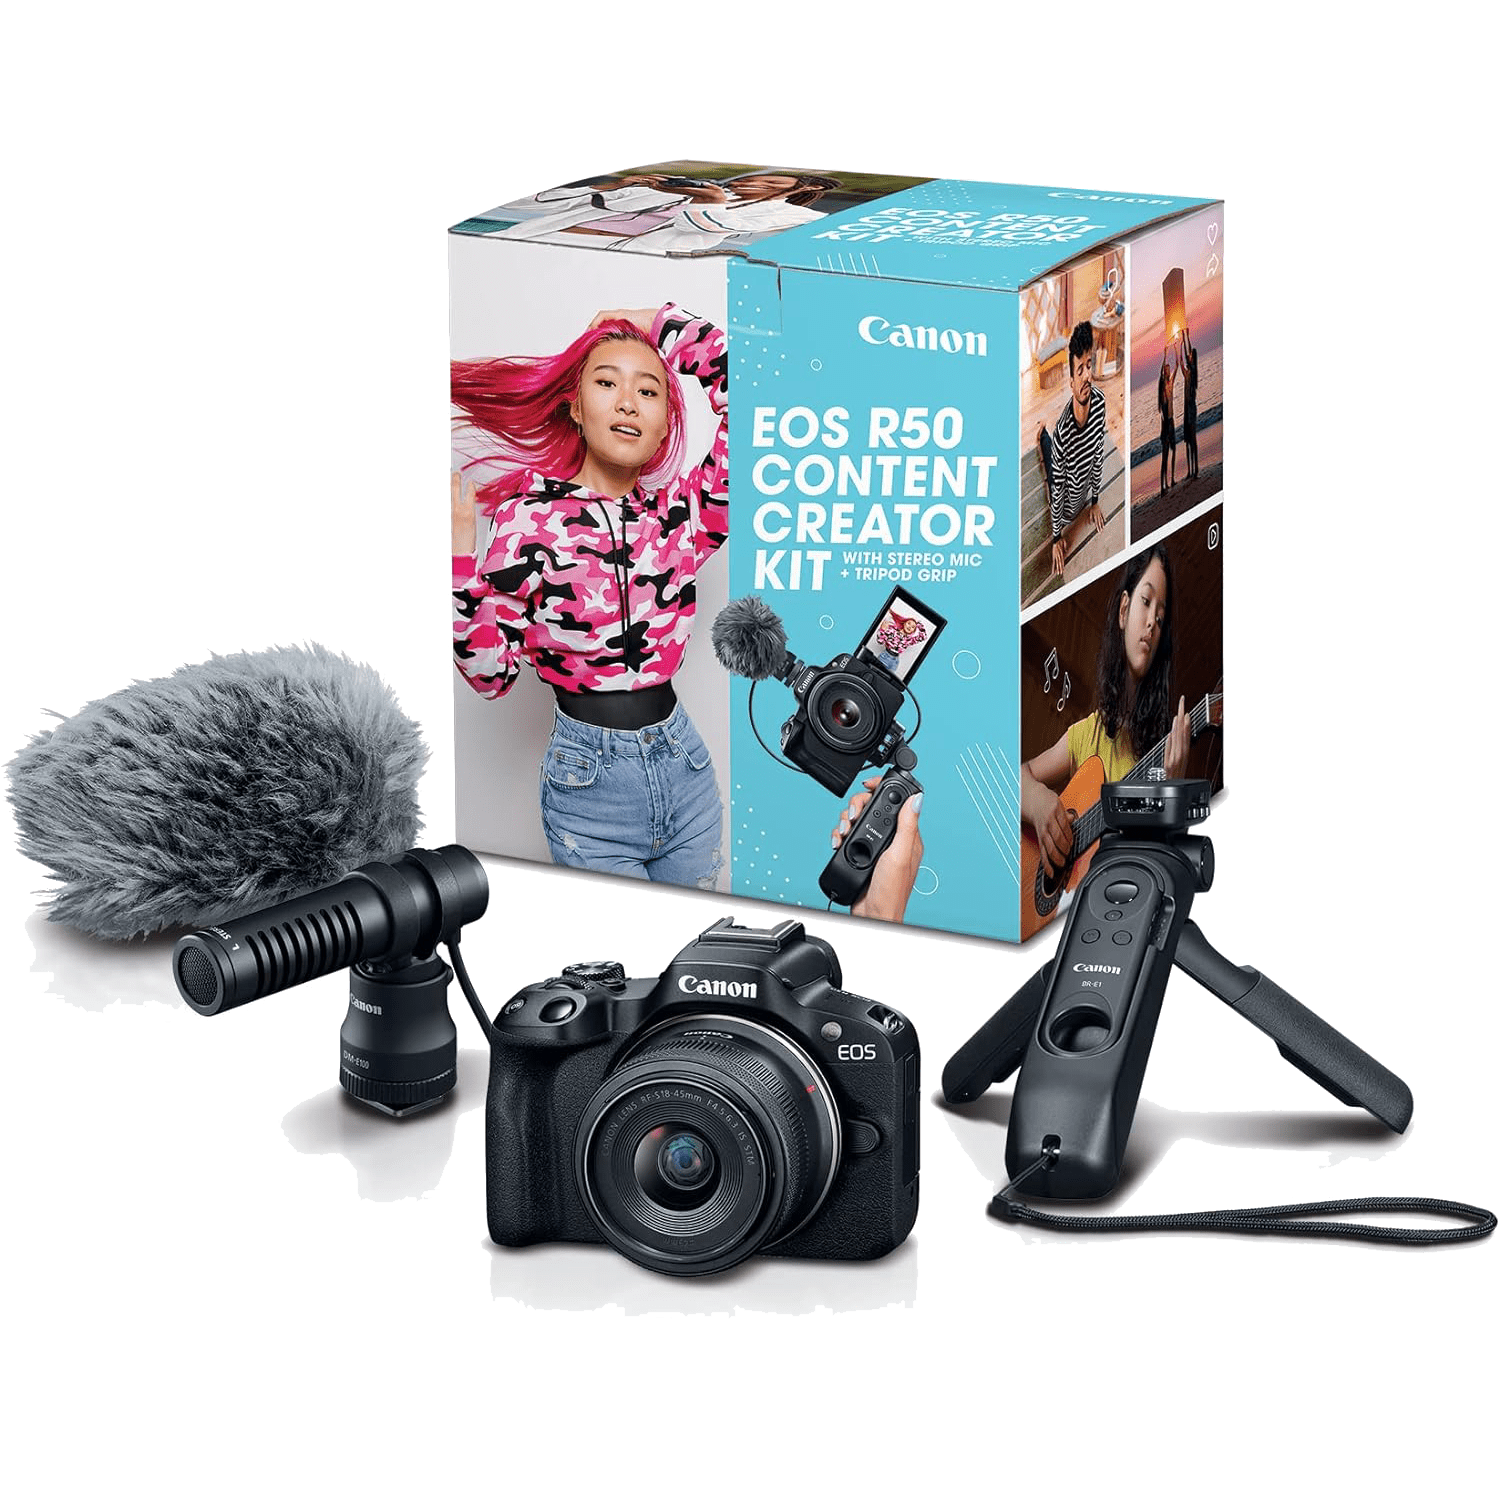 Canon EOS R50 Content Creator Kit, Mirrorless Vlogging Camera, 24.2 MP, 4K Video, DIGIC X Image Processor